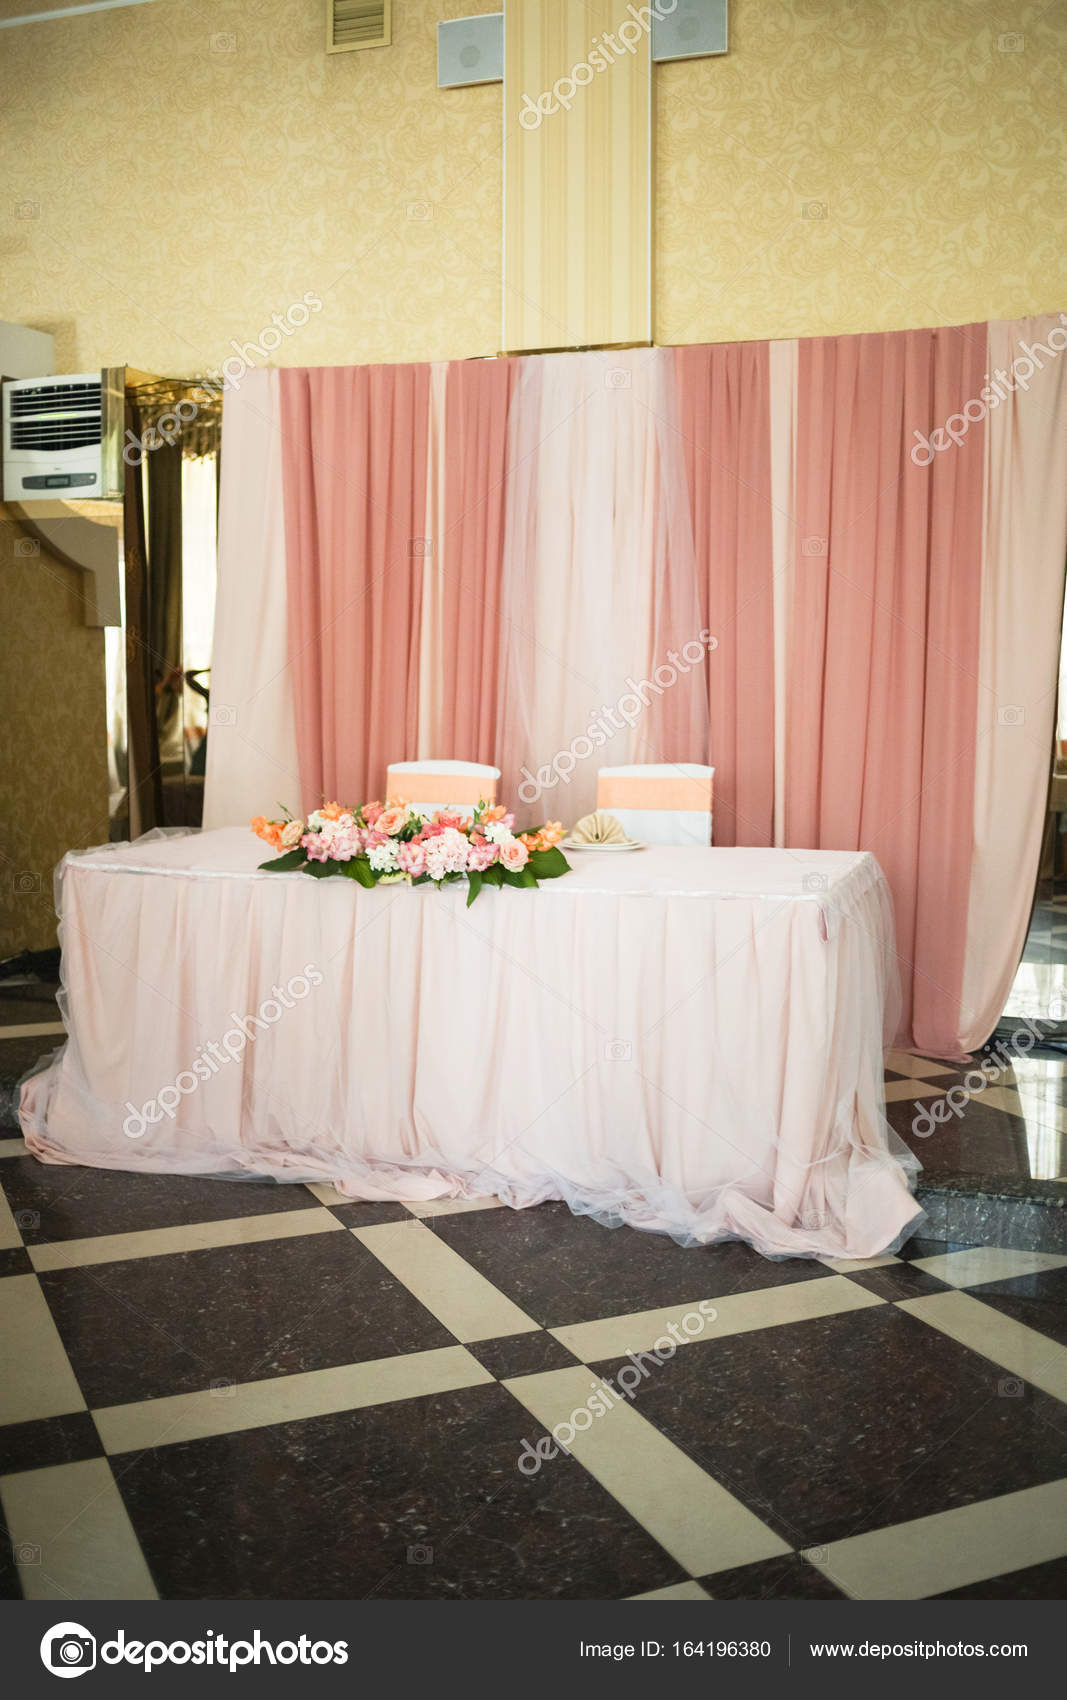 Peach Color Bedroom Decor Wedding Decoration In Peach